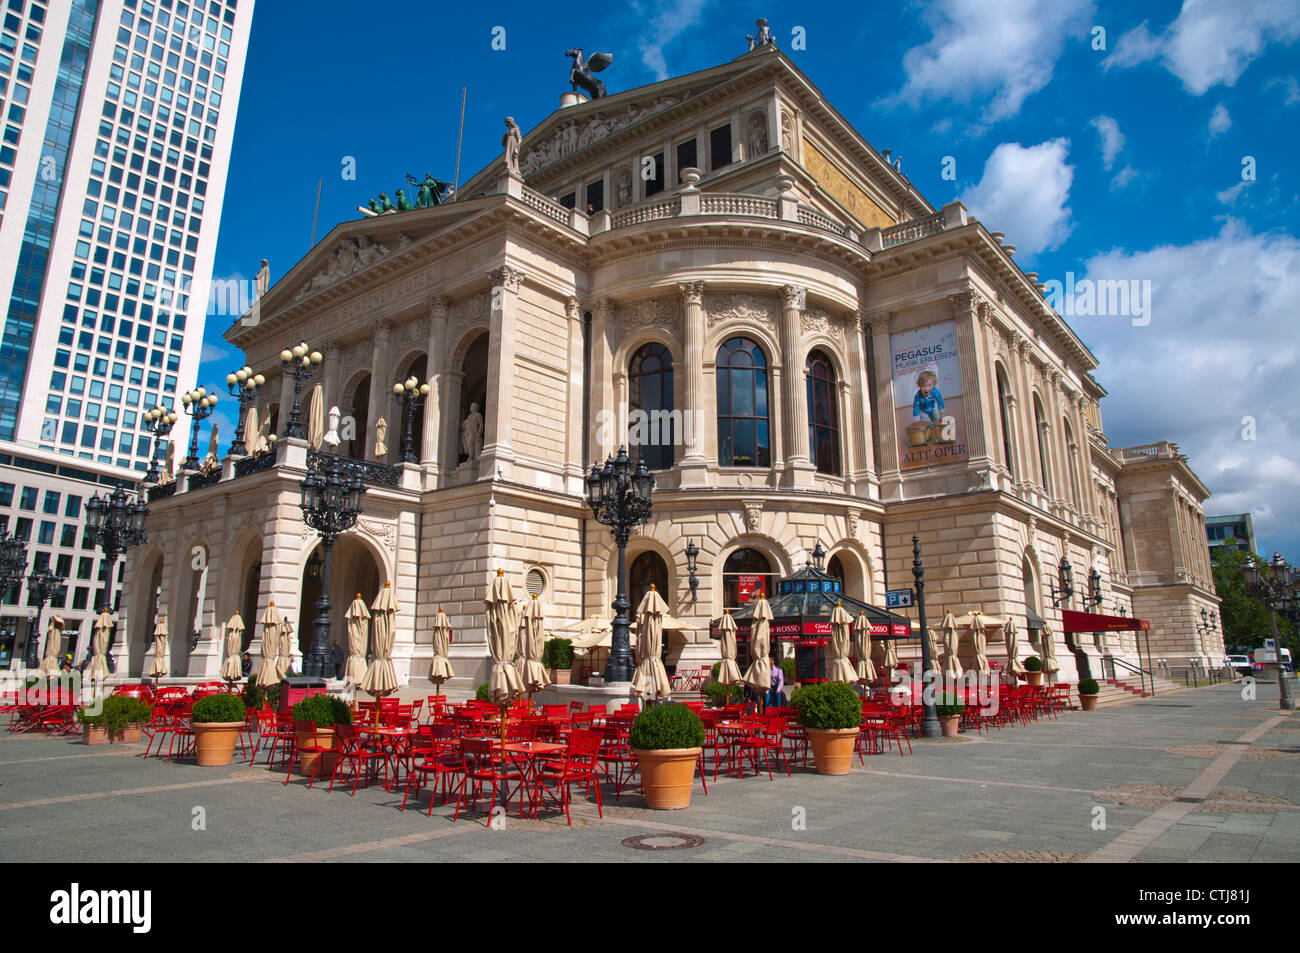 Alte Oper the opera house Opernplatz square central Frankfurt am Main city state of Hesse Germany Europe Stock Photo